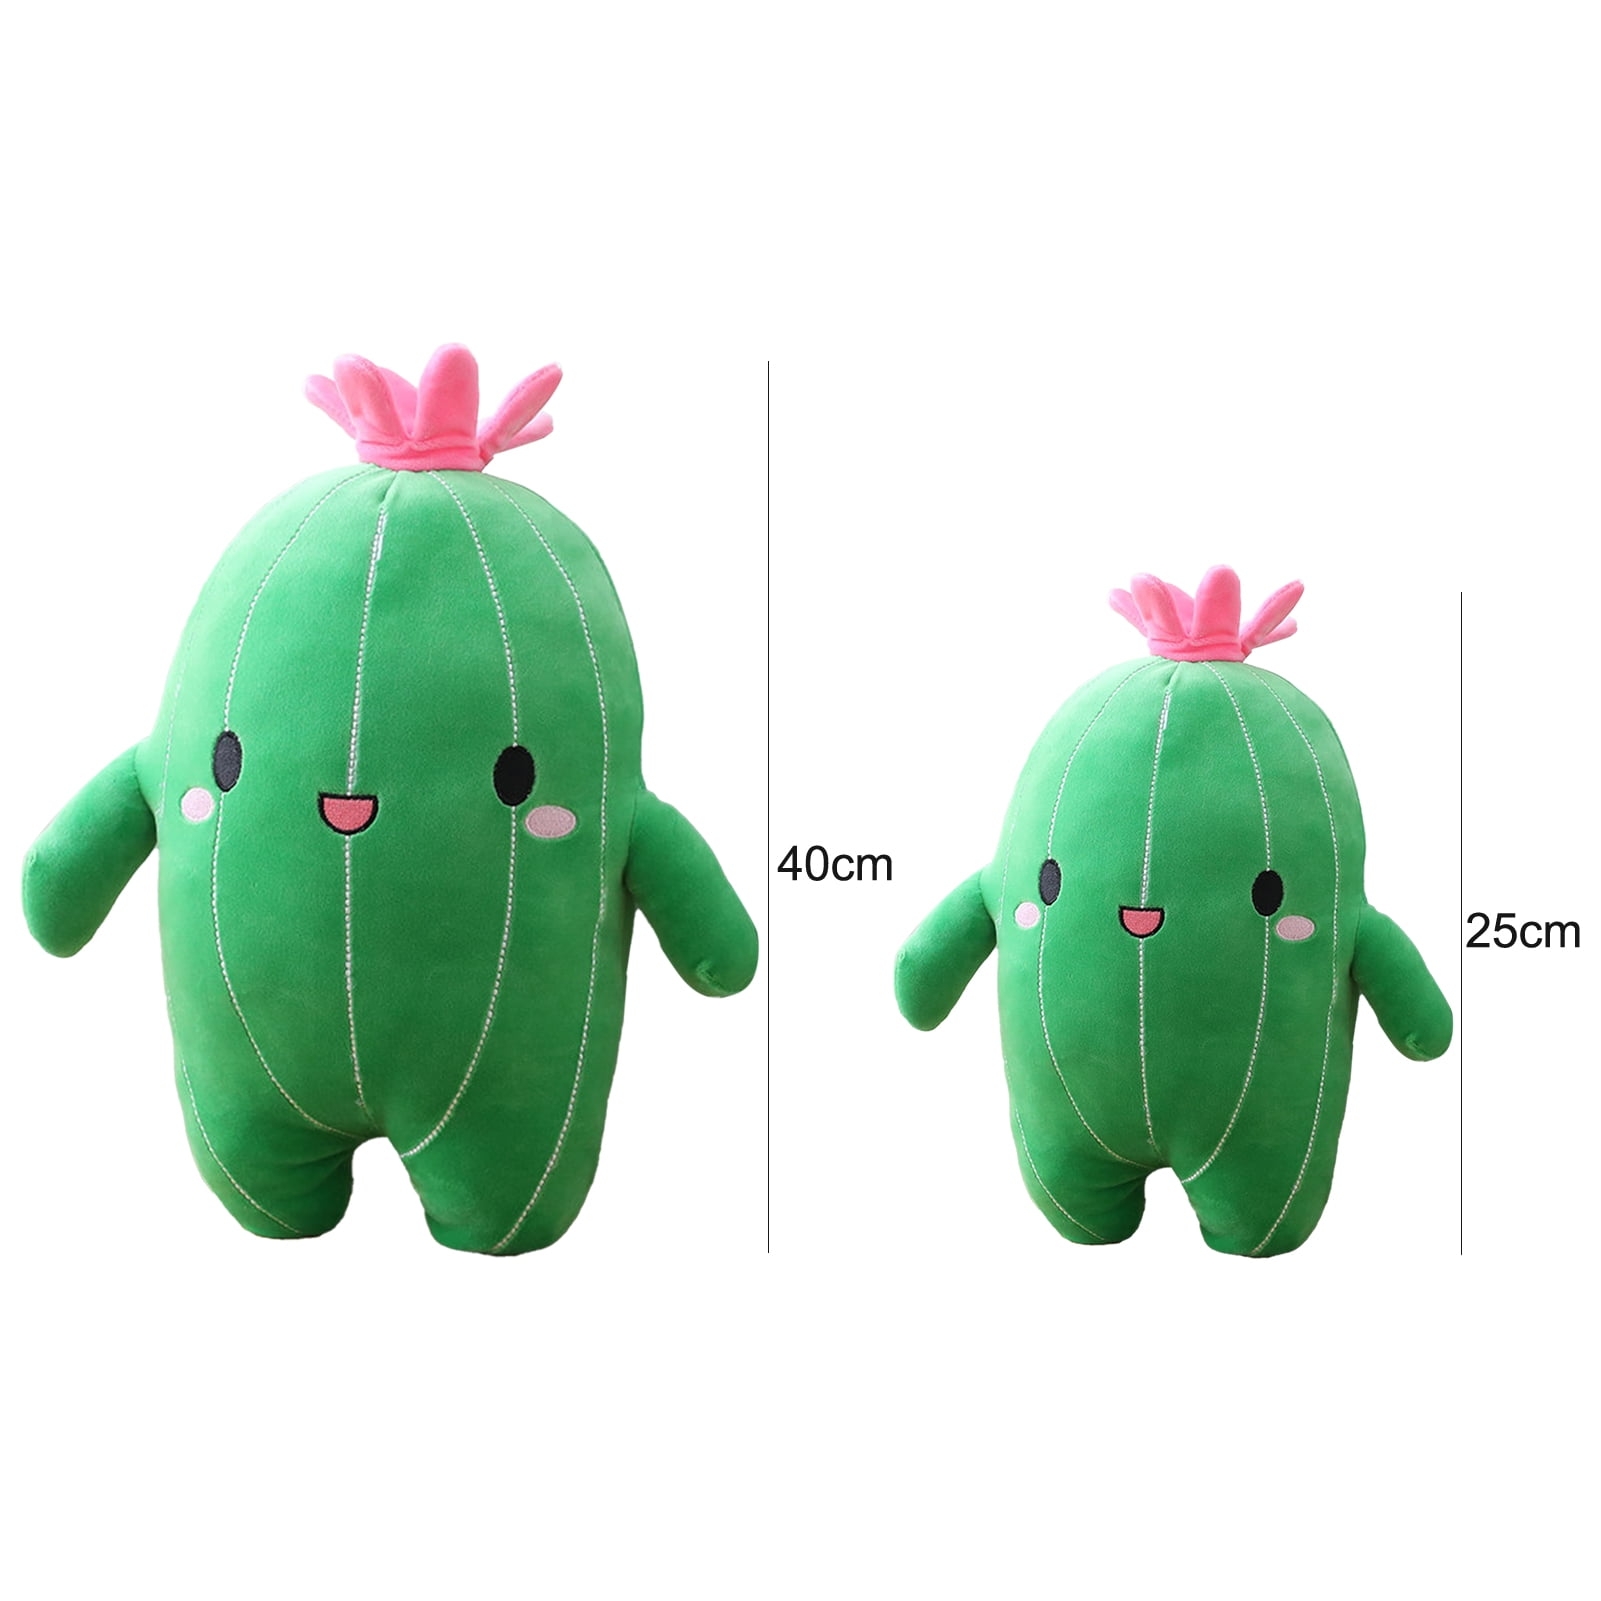 Lapin Cactus Stuffed Animal: Lapin Cactus Plush Squishy Soft Toy